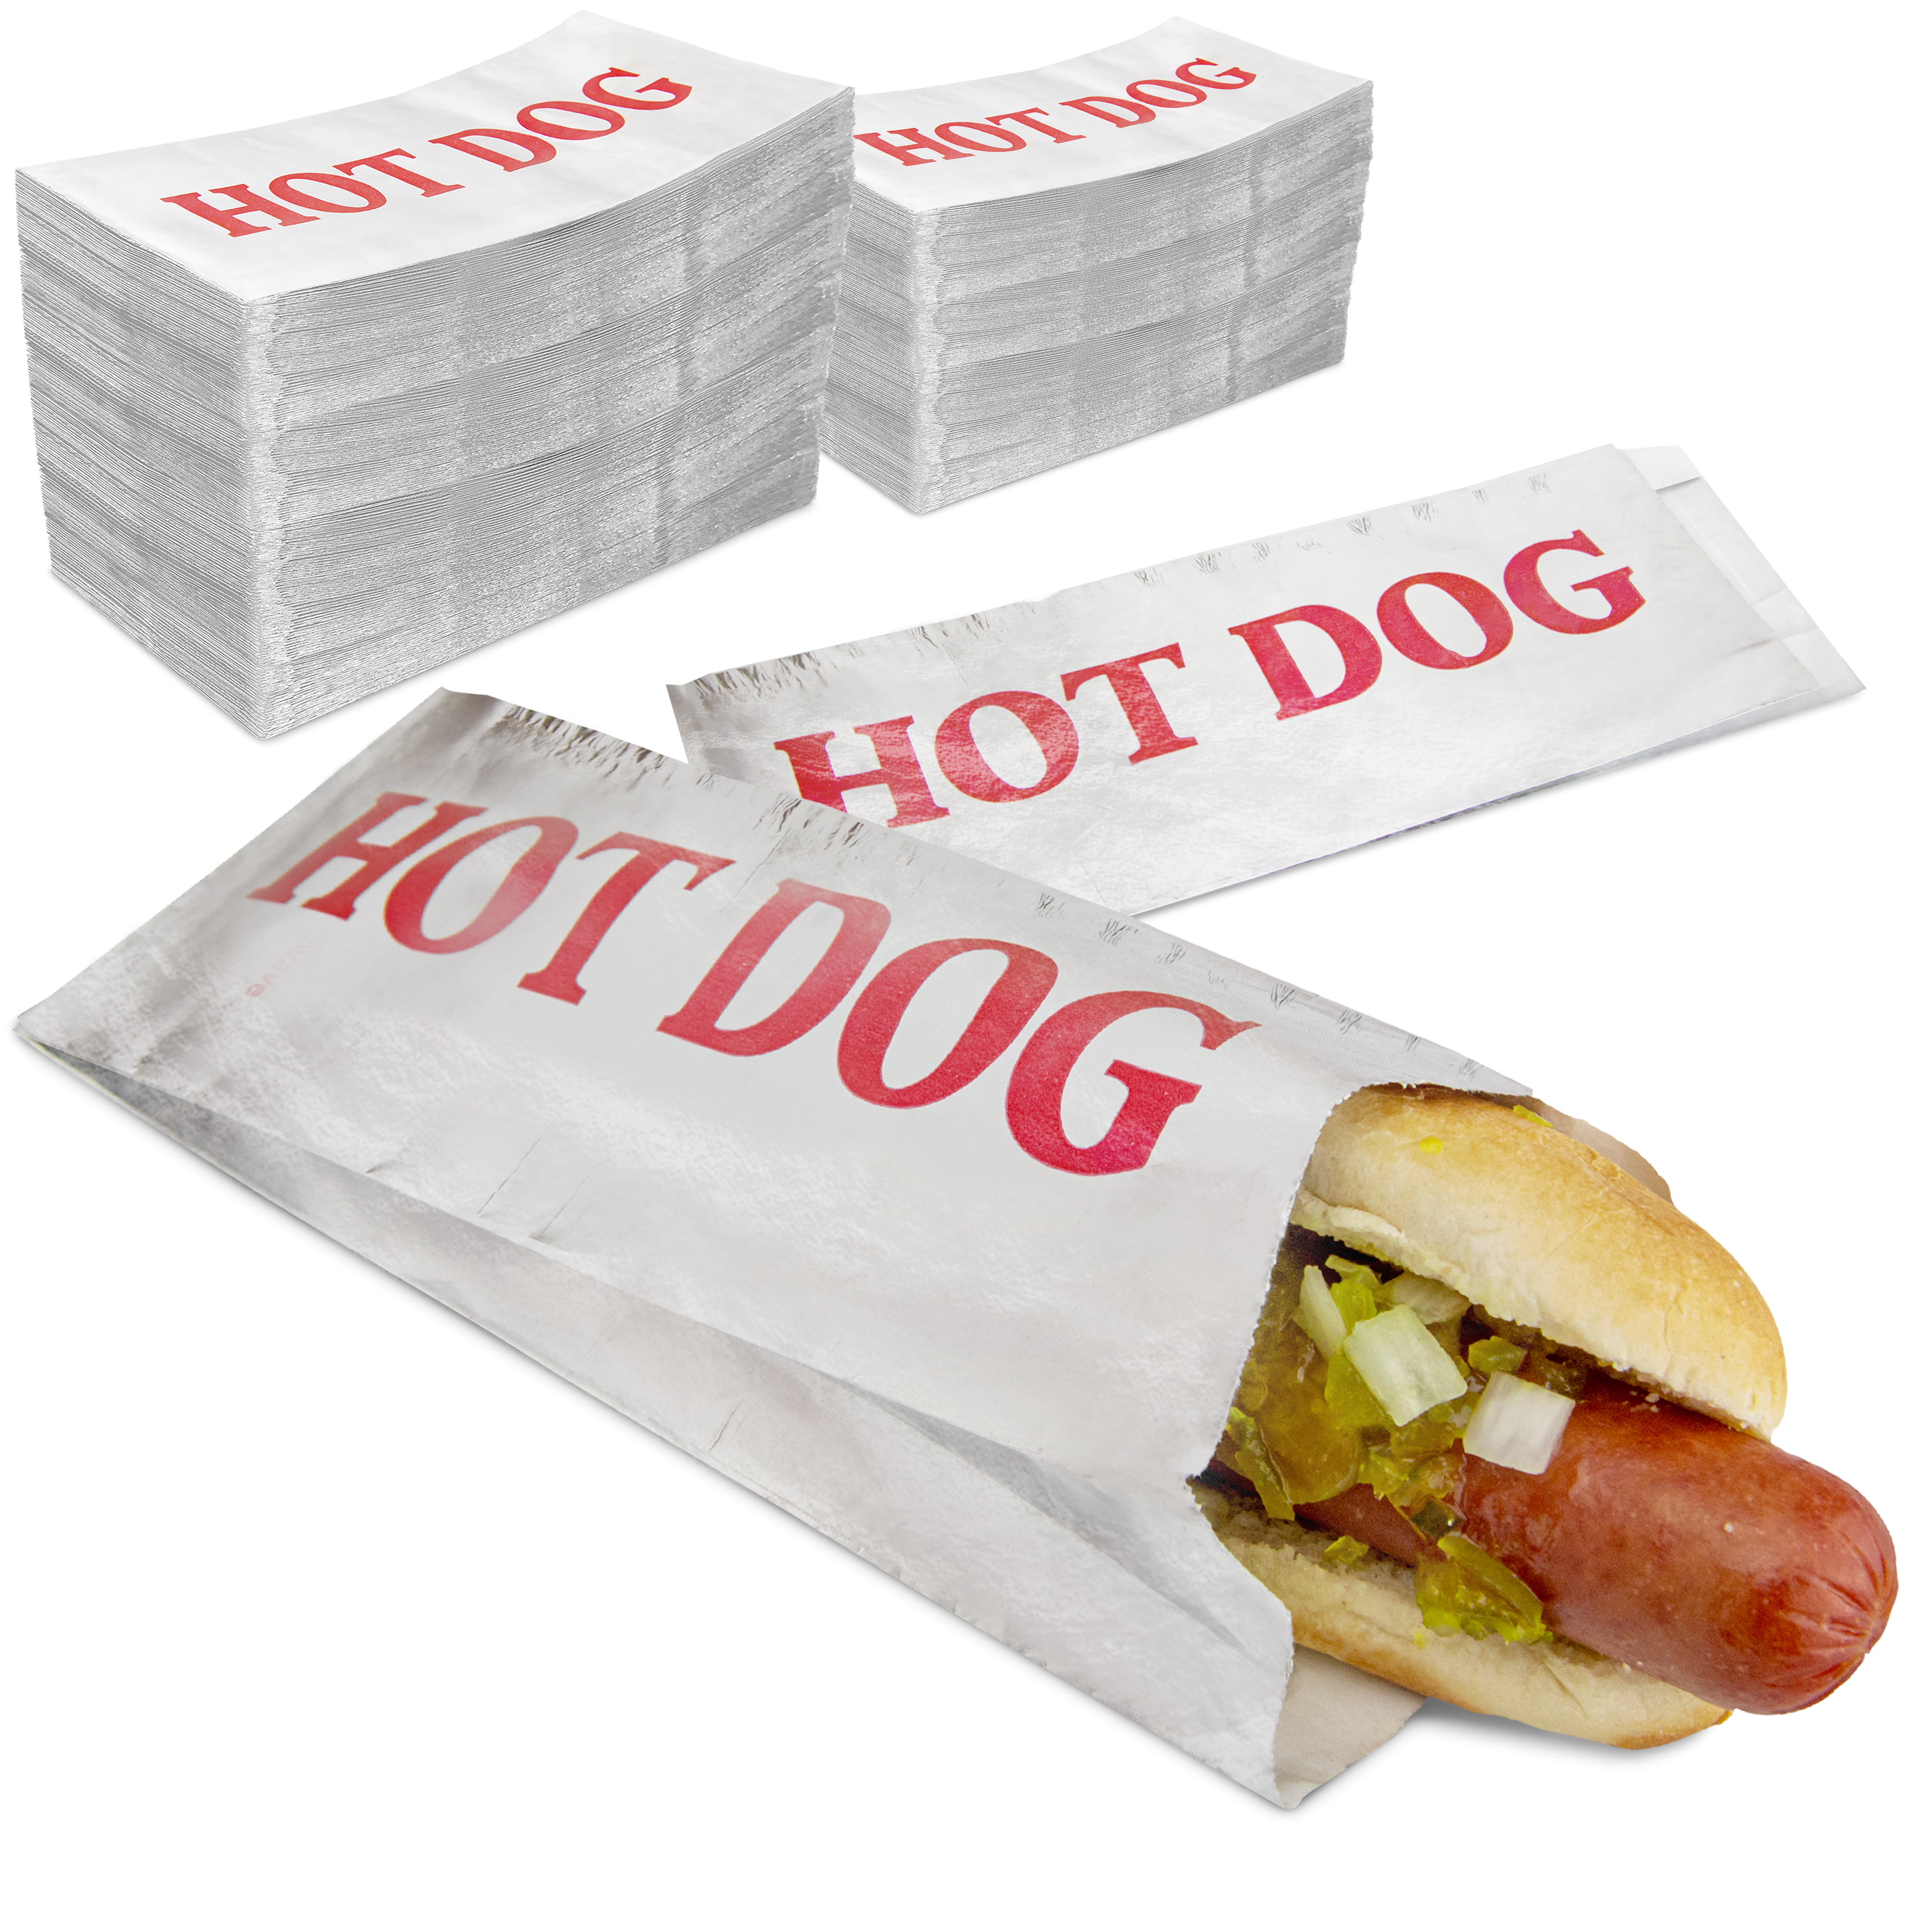 Hot Dog Hotdog Foil Bags for Concession Use 1000 case 